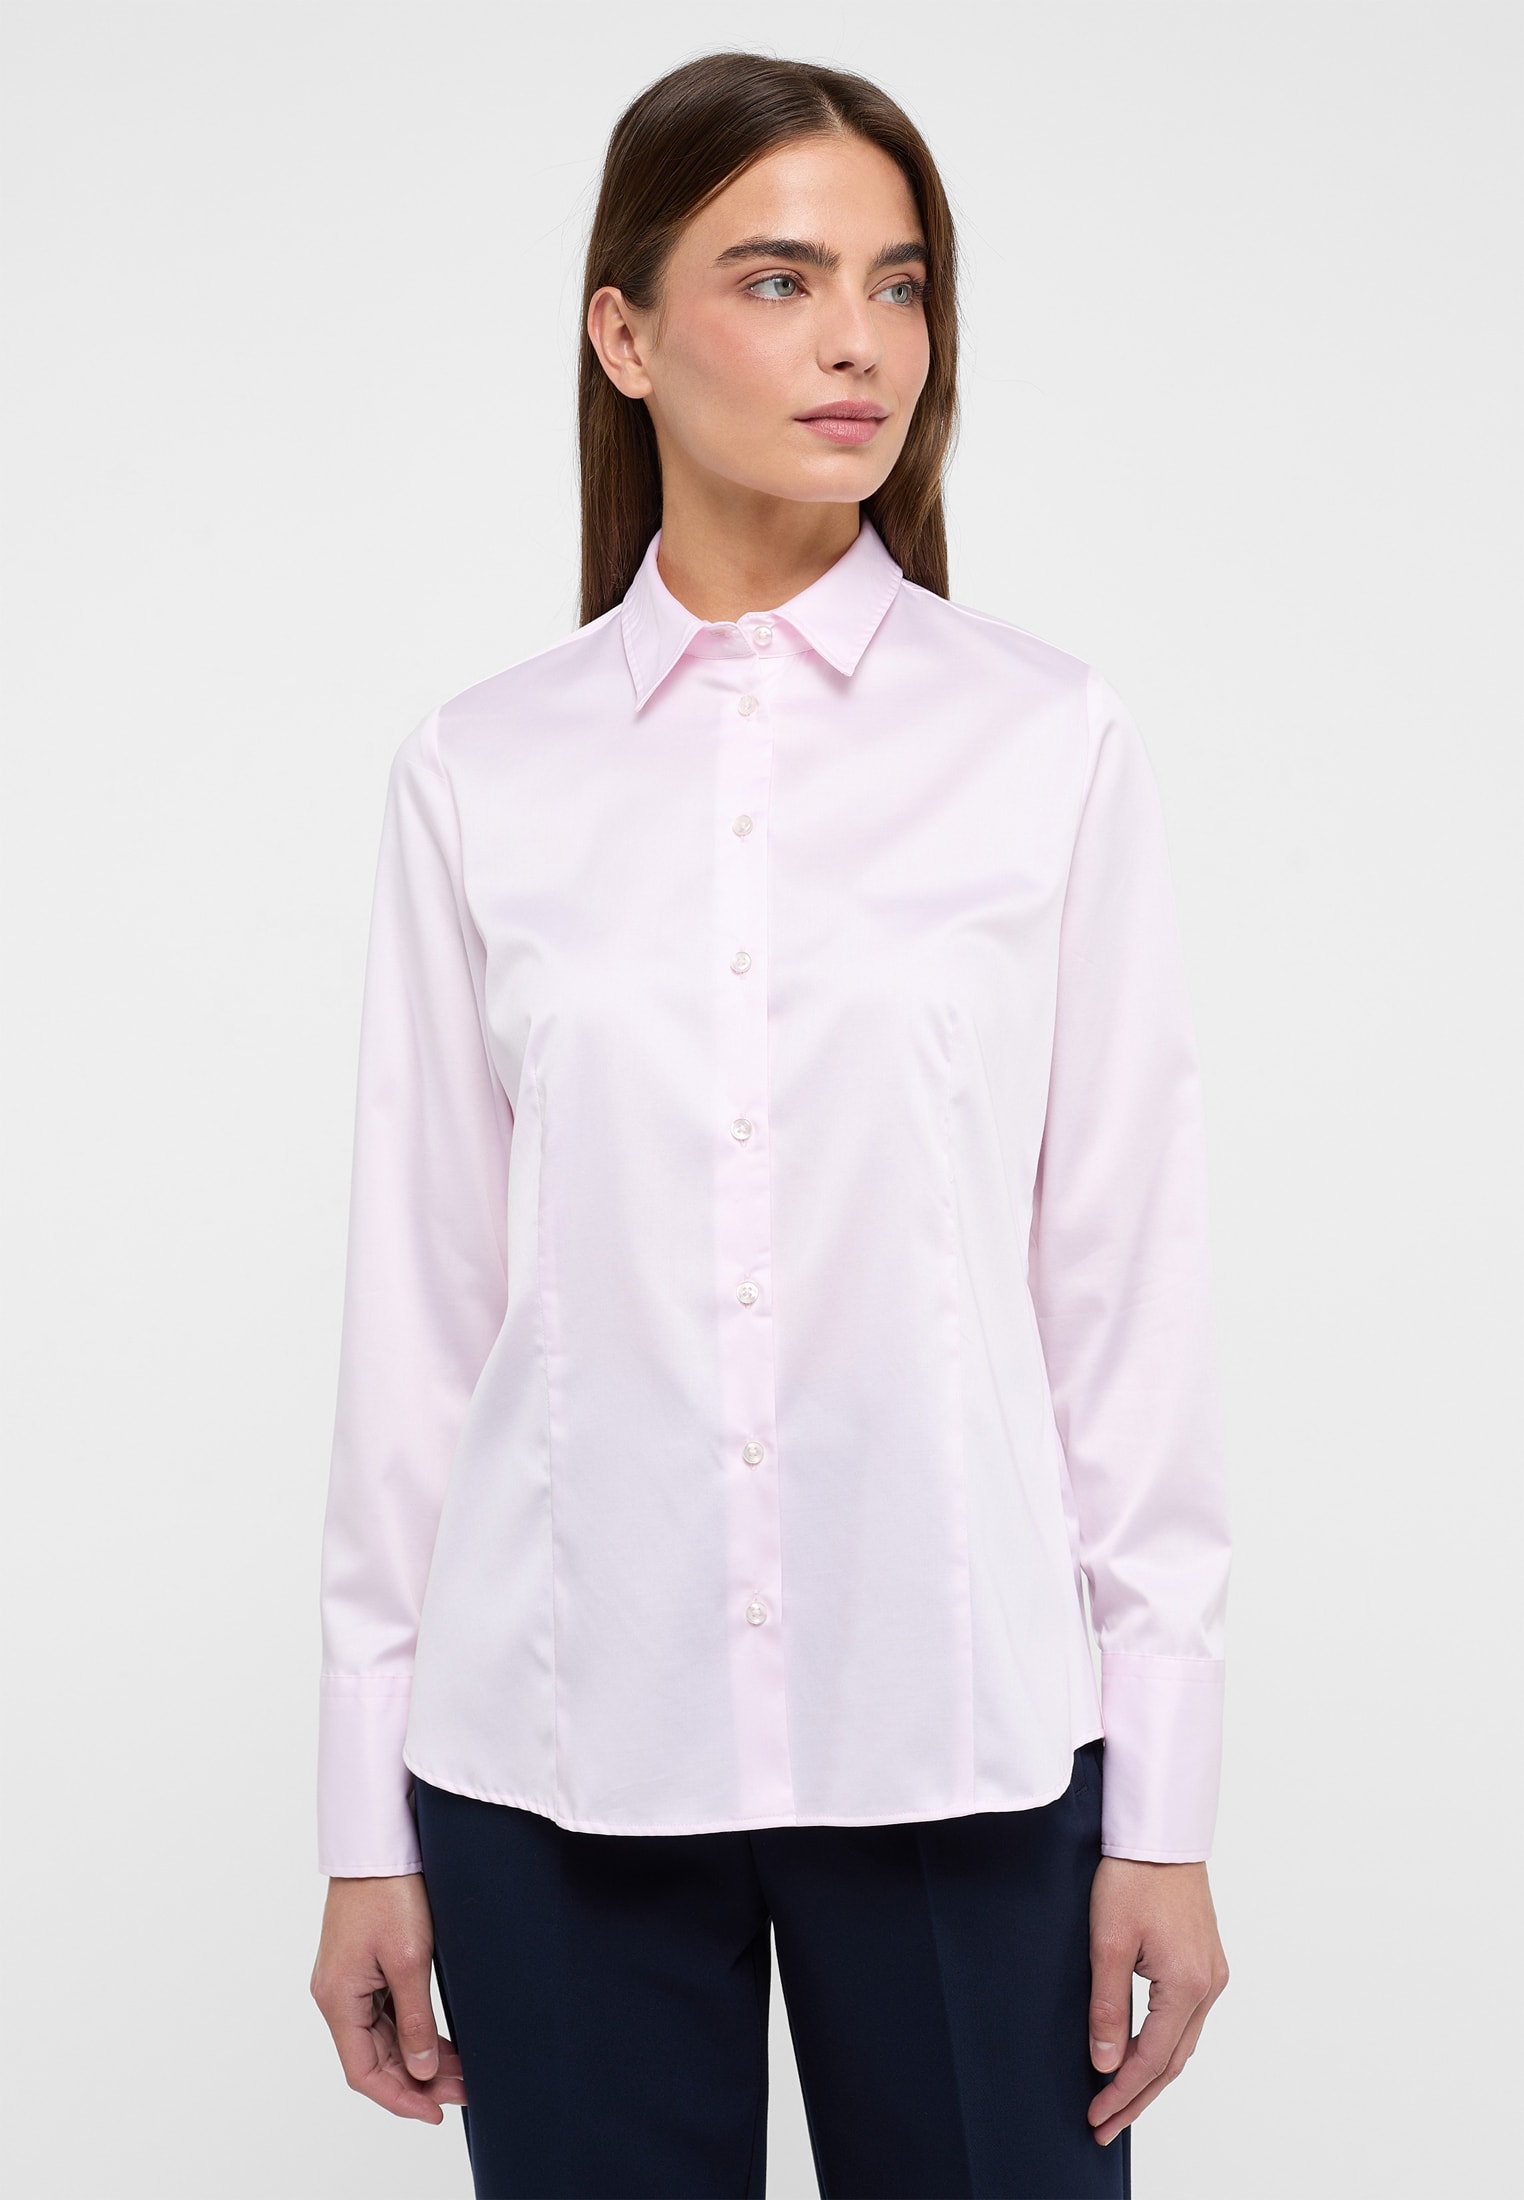 Satin Shirt Bluse rosa | | Langarm 44 unifarben | in | 2BL00399-15-11-44-1/1 rosa